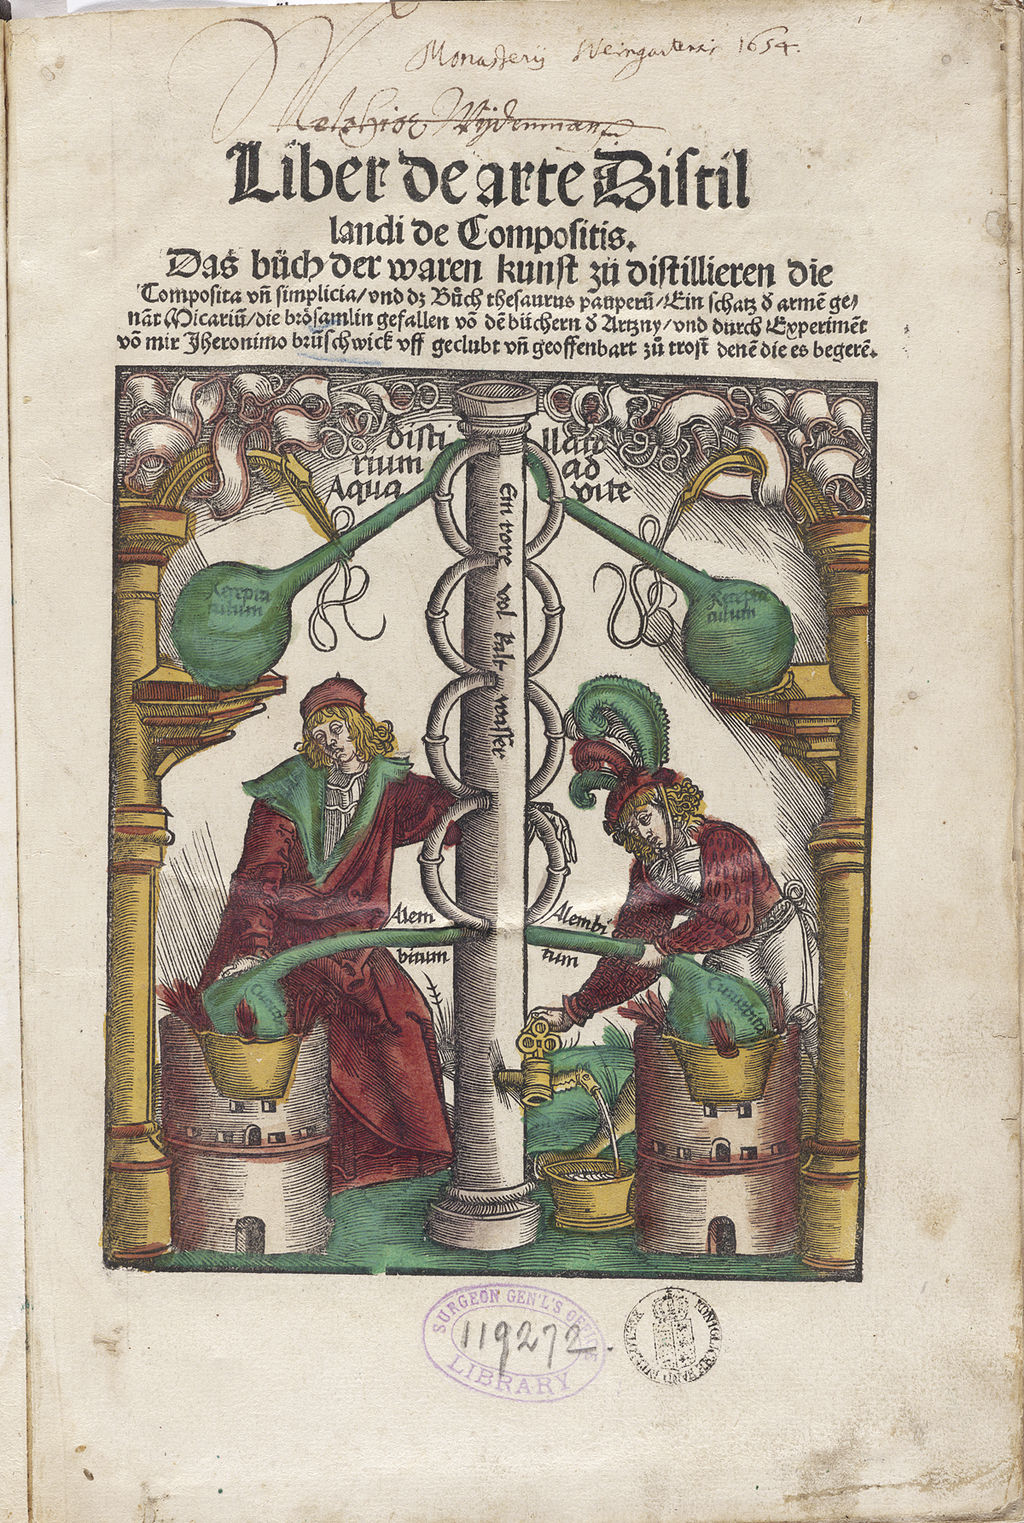 Hieronymous Brunschwig, Liber de arte distillandi simplicia et composita. Public domain, via Wikimedia Commons